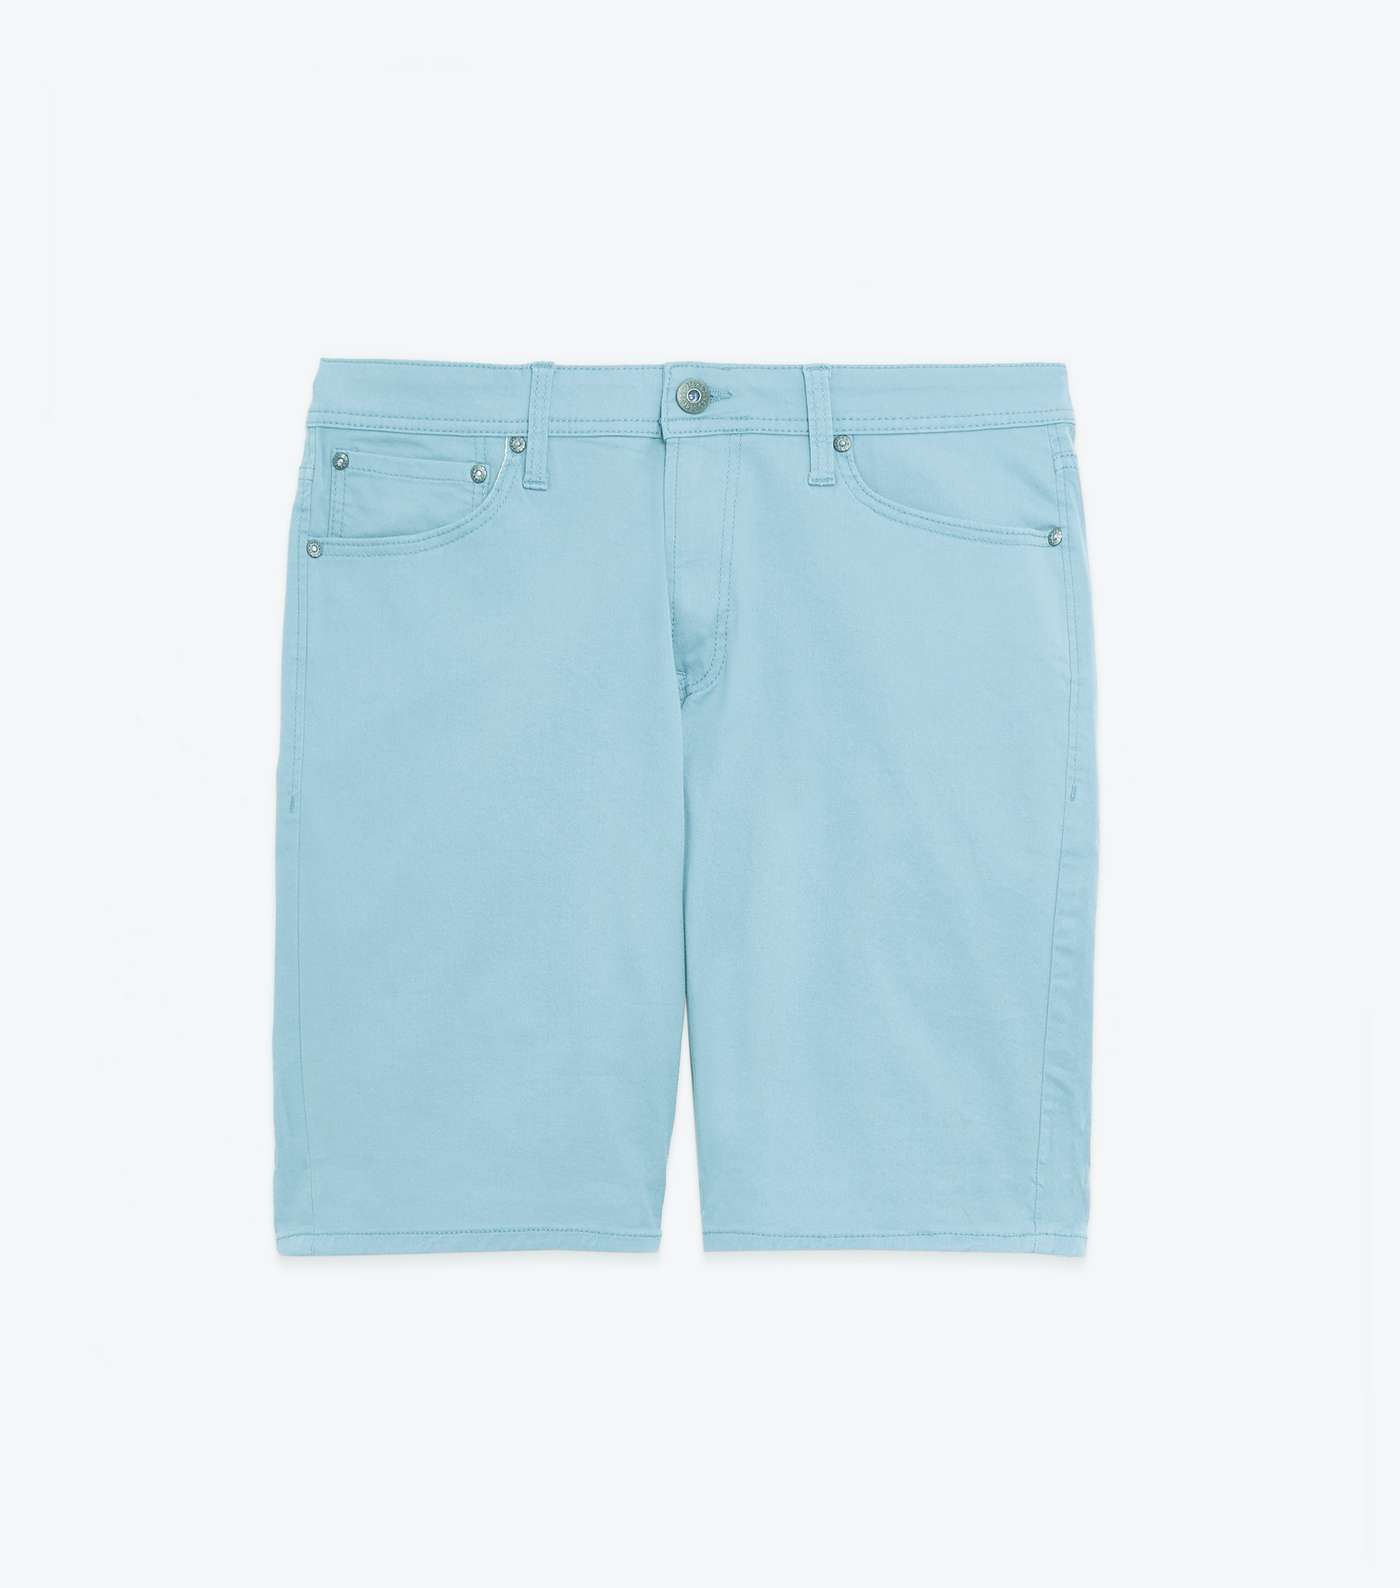 Jack & Jones Pale Blue Denim Slim Fit Shorts Image 5